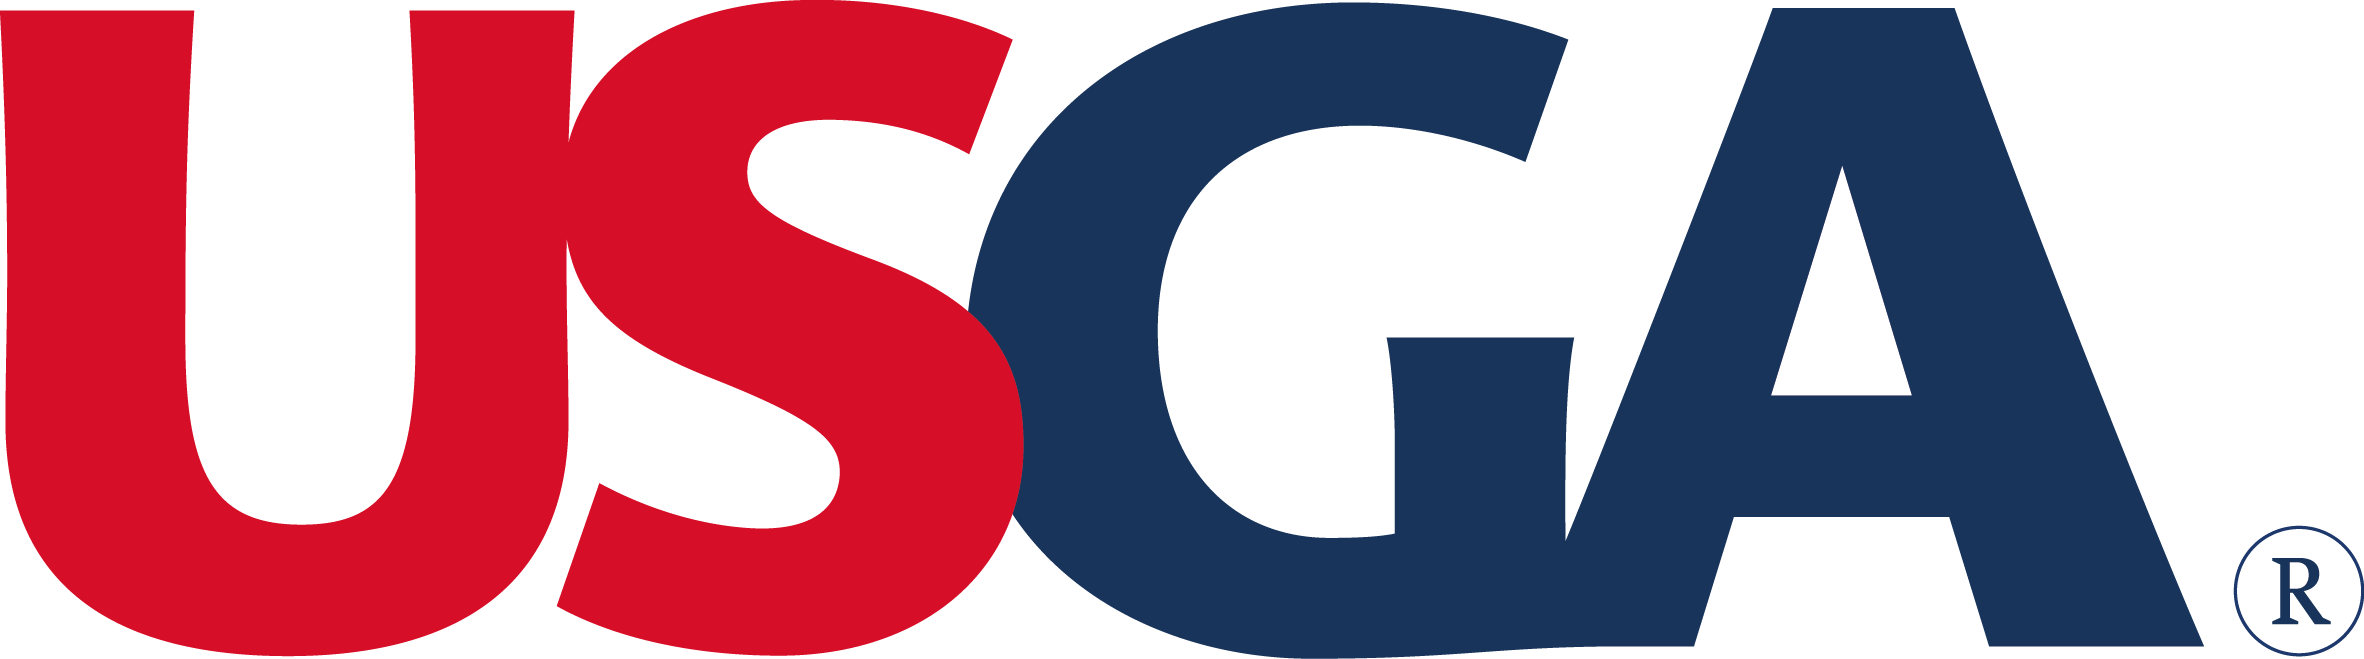 USGA Logo - USGA logo - tessmanseed